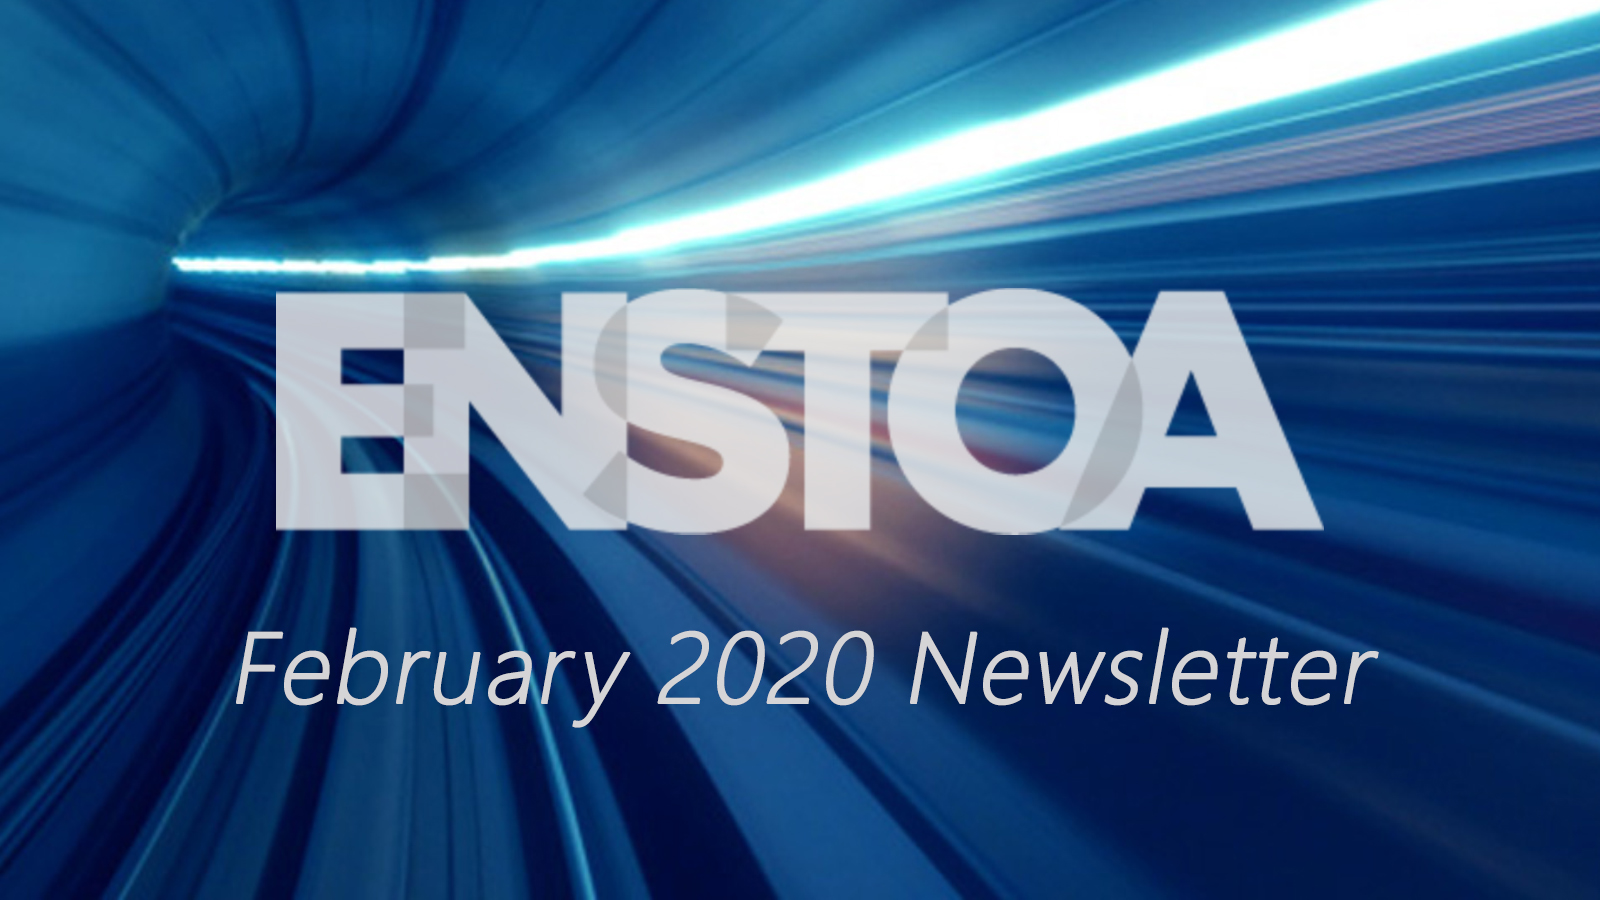 February 2020 Newsletter: Enstoa Selected as Oracle 2020 Global Events Platinum Sponsor